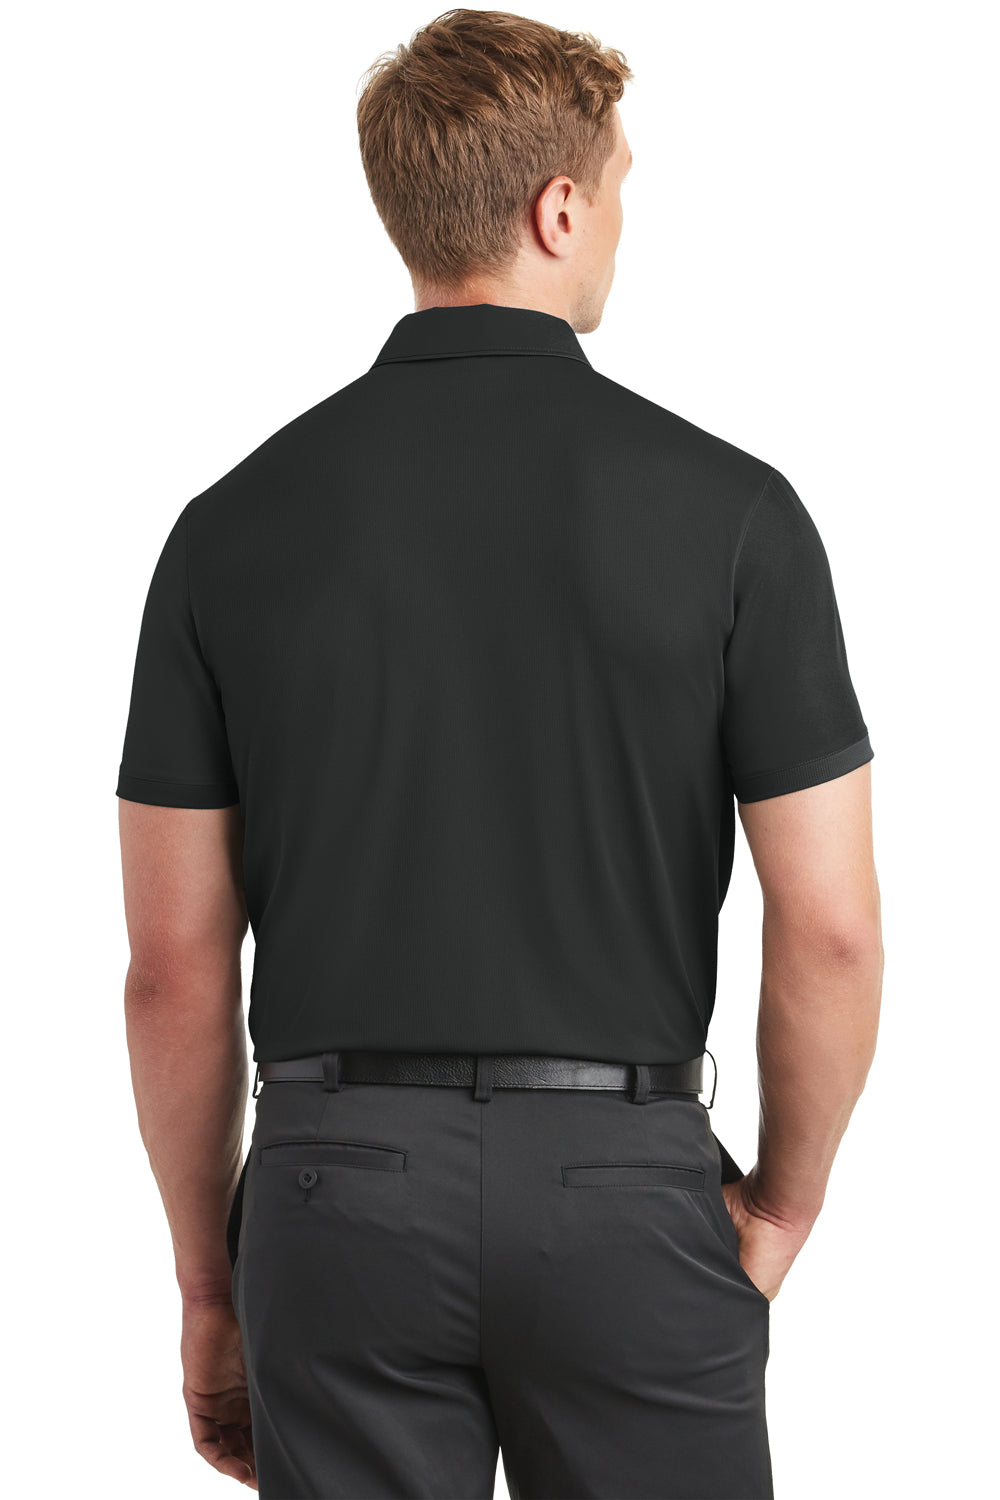 Nike 838958 Mens Dri-Fit Moisture Wicking Short Sleeve Polo Shirt Black Back